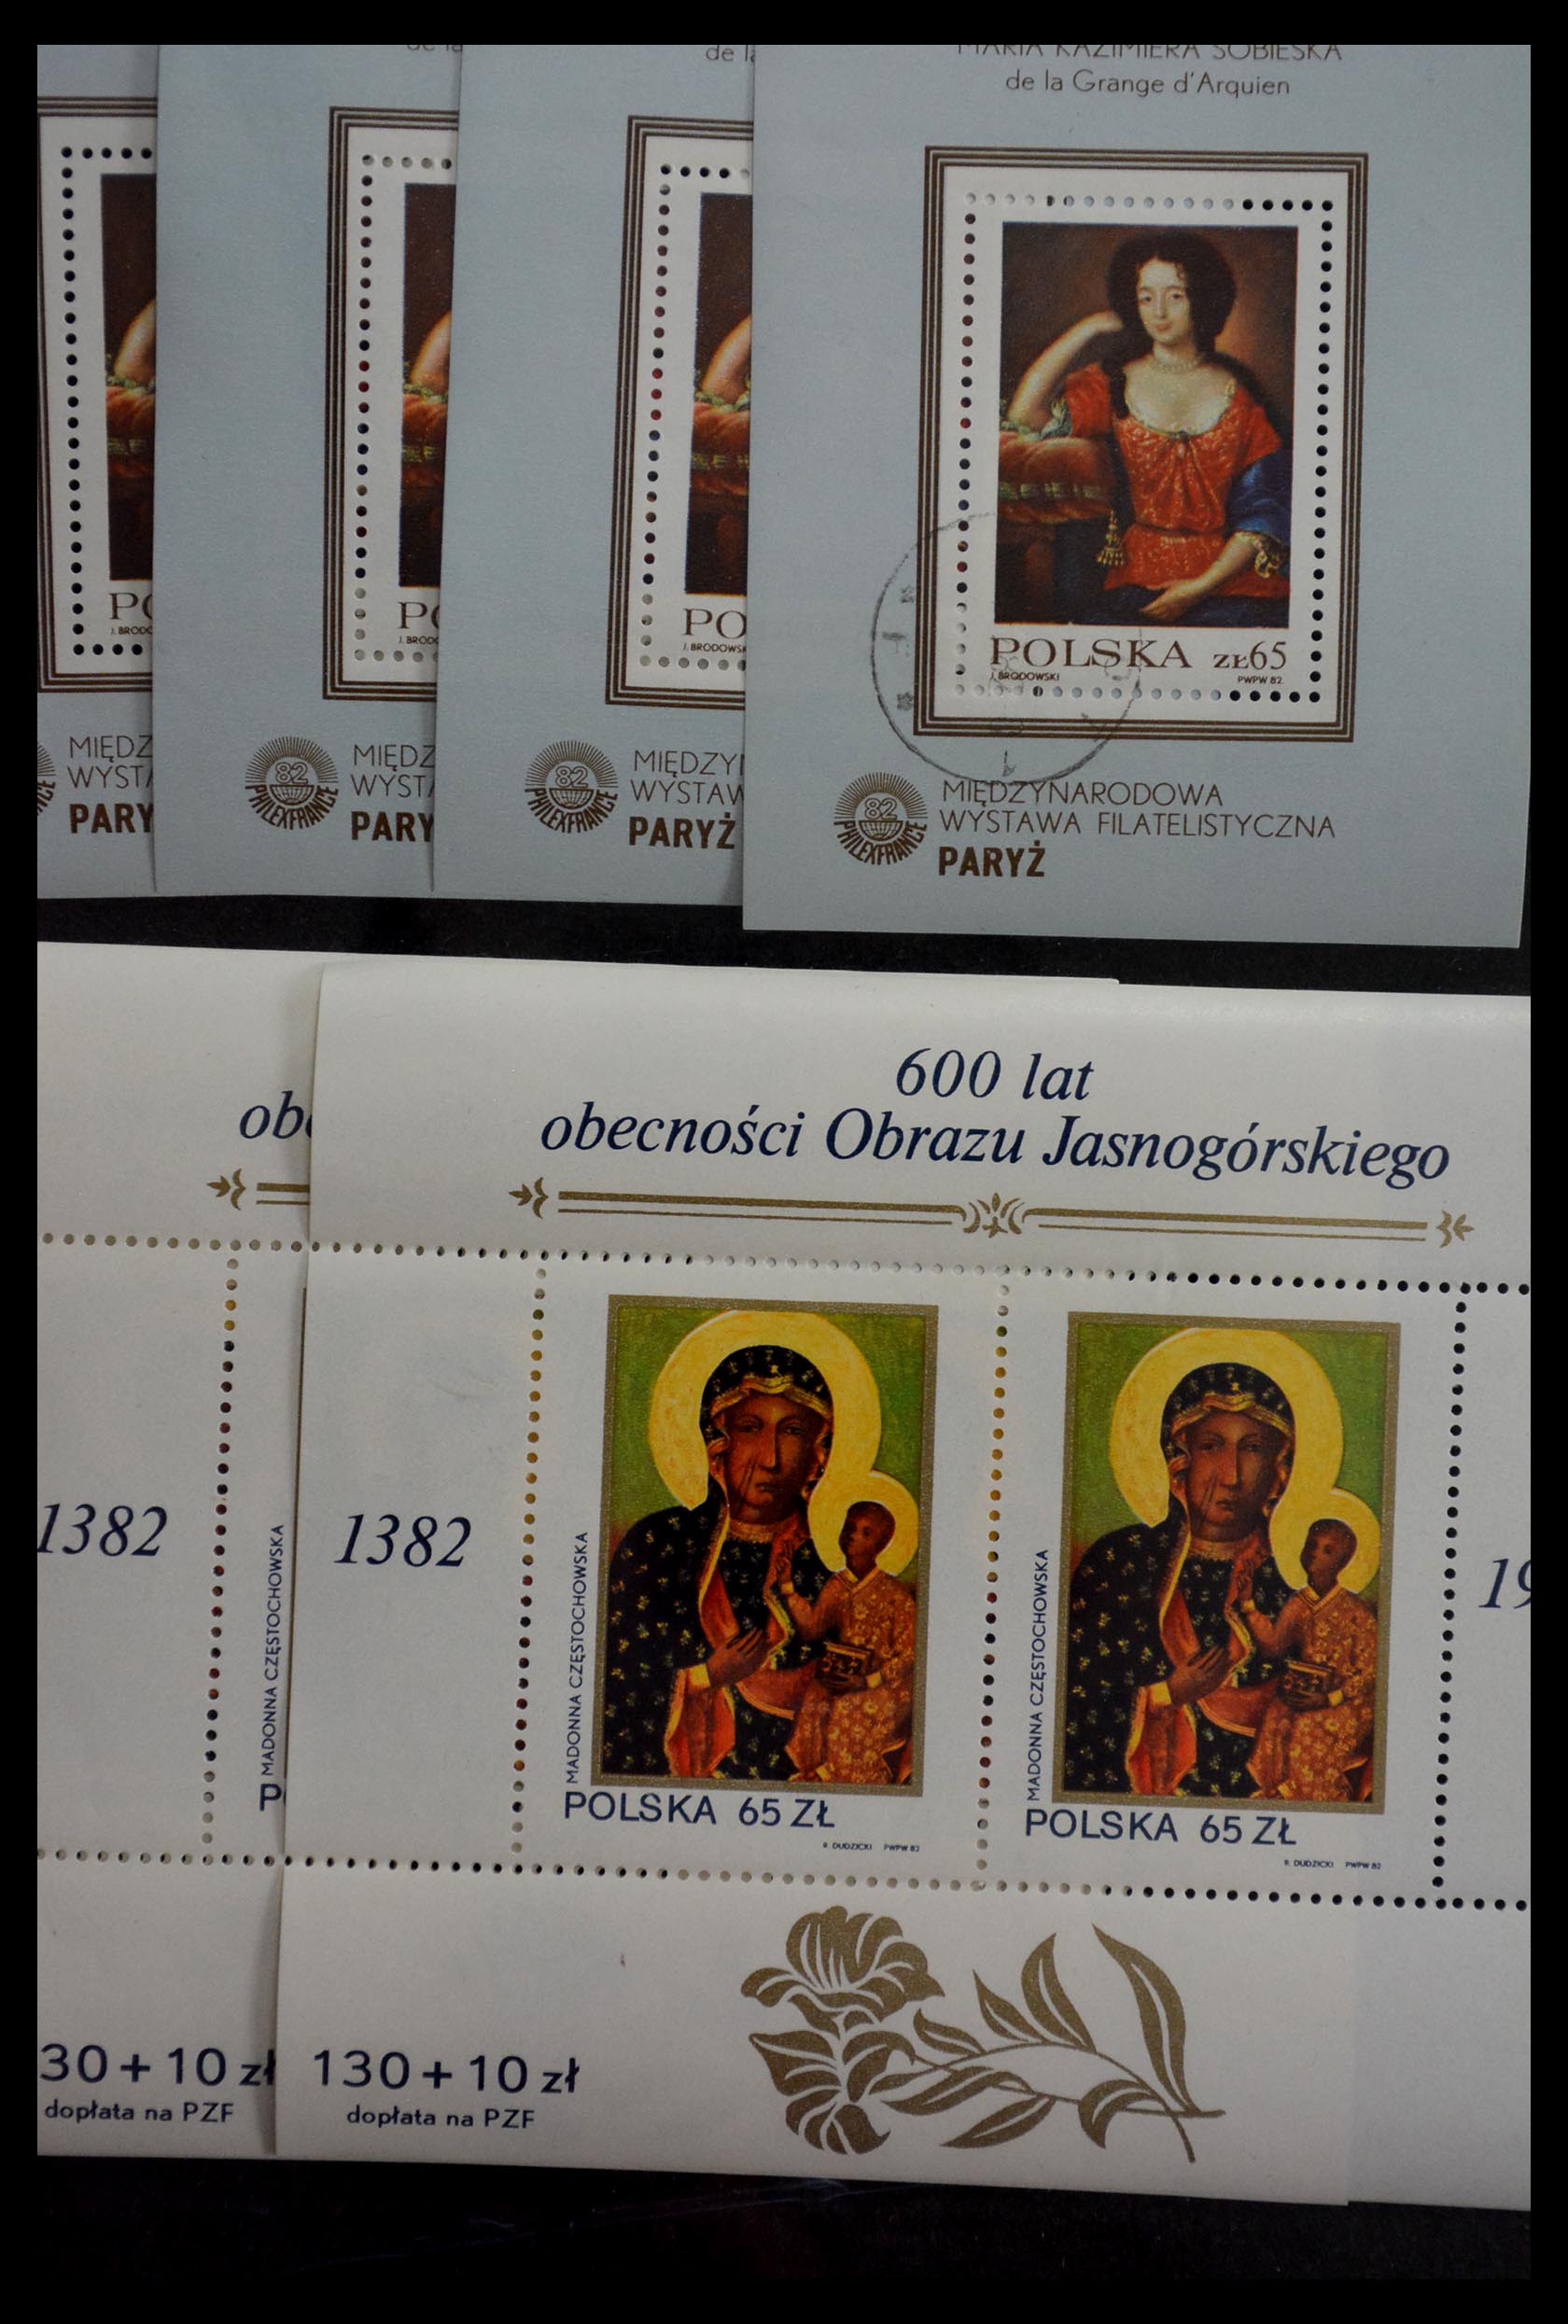 28986 031 - 28986 Souvenir sheets Western Europe.